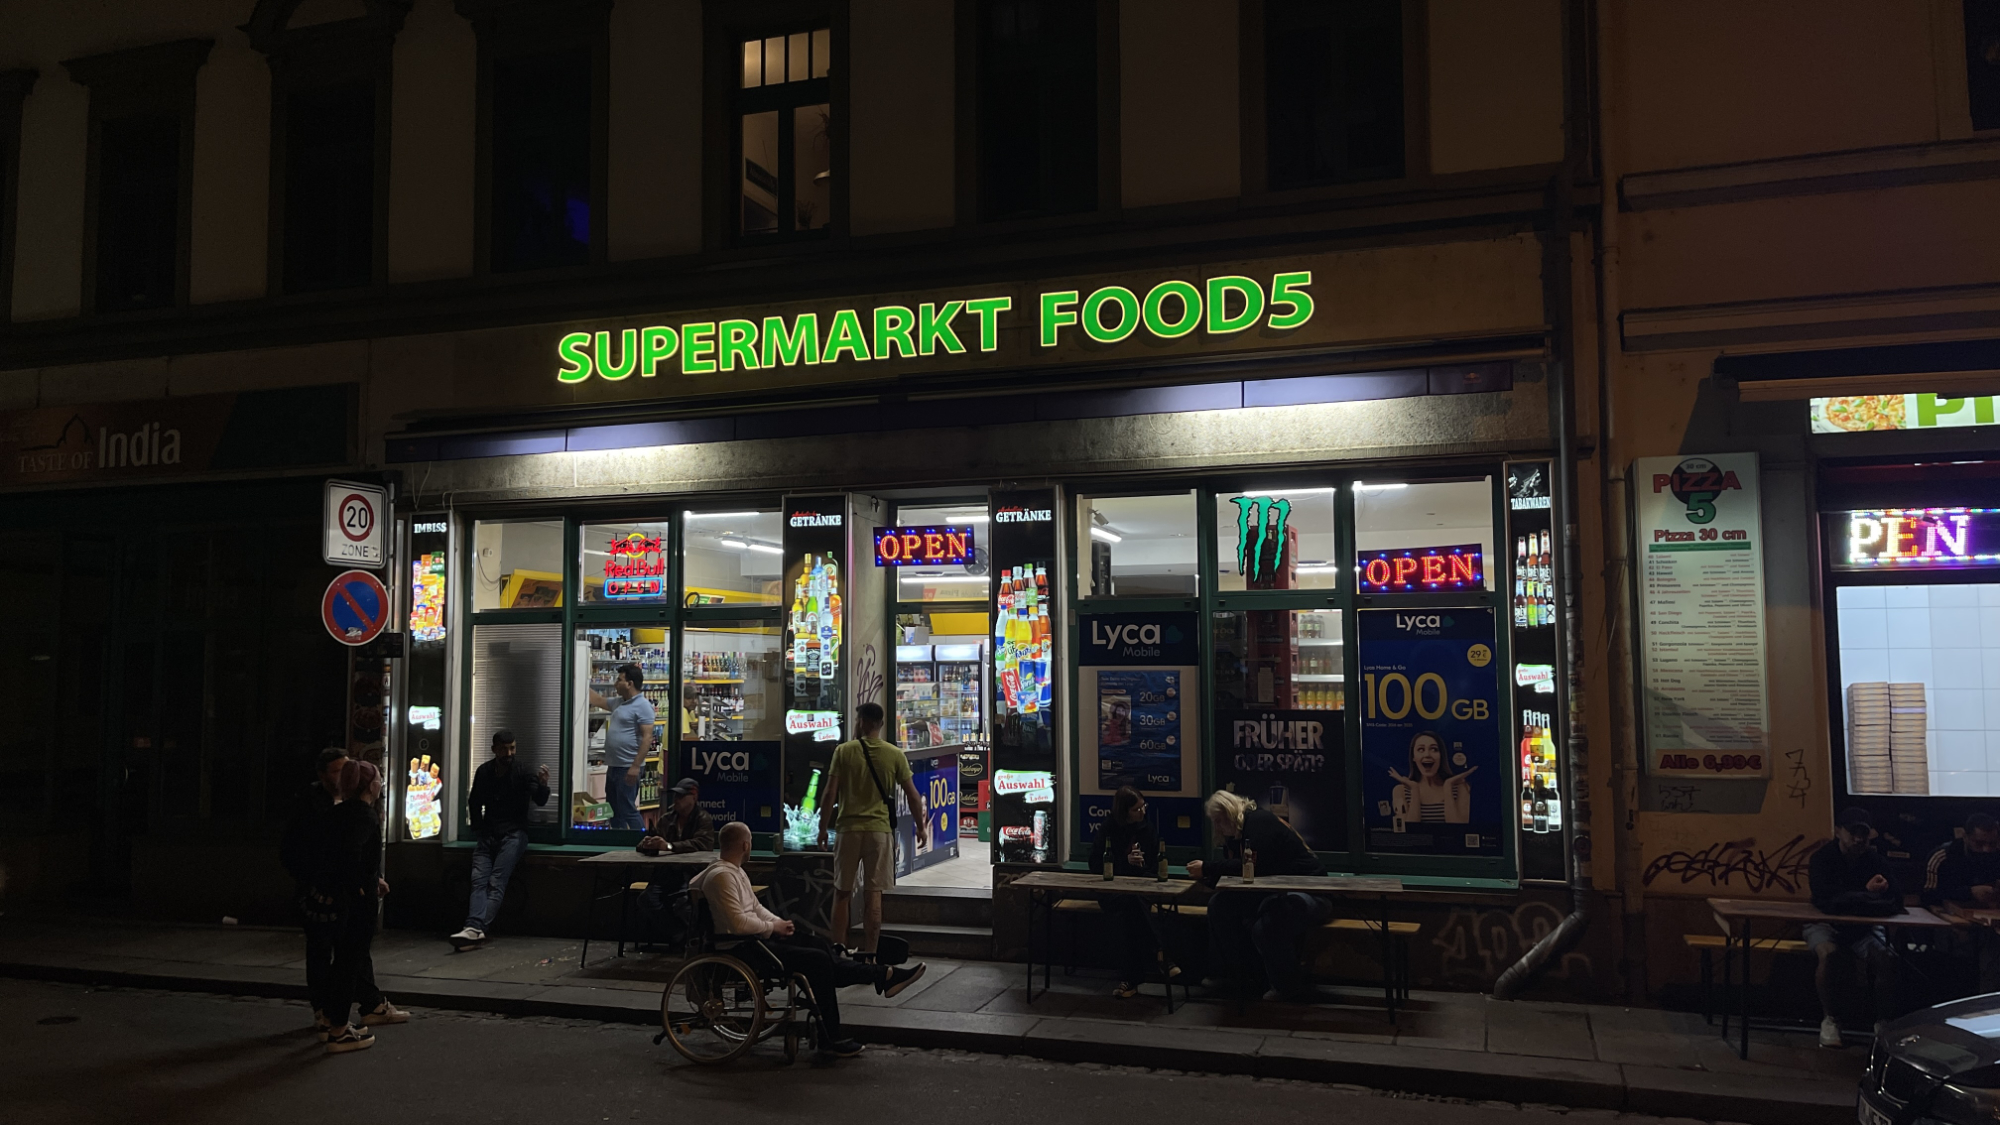 Supermarkt Food 5 - Foto: Florian Varga